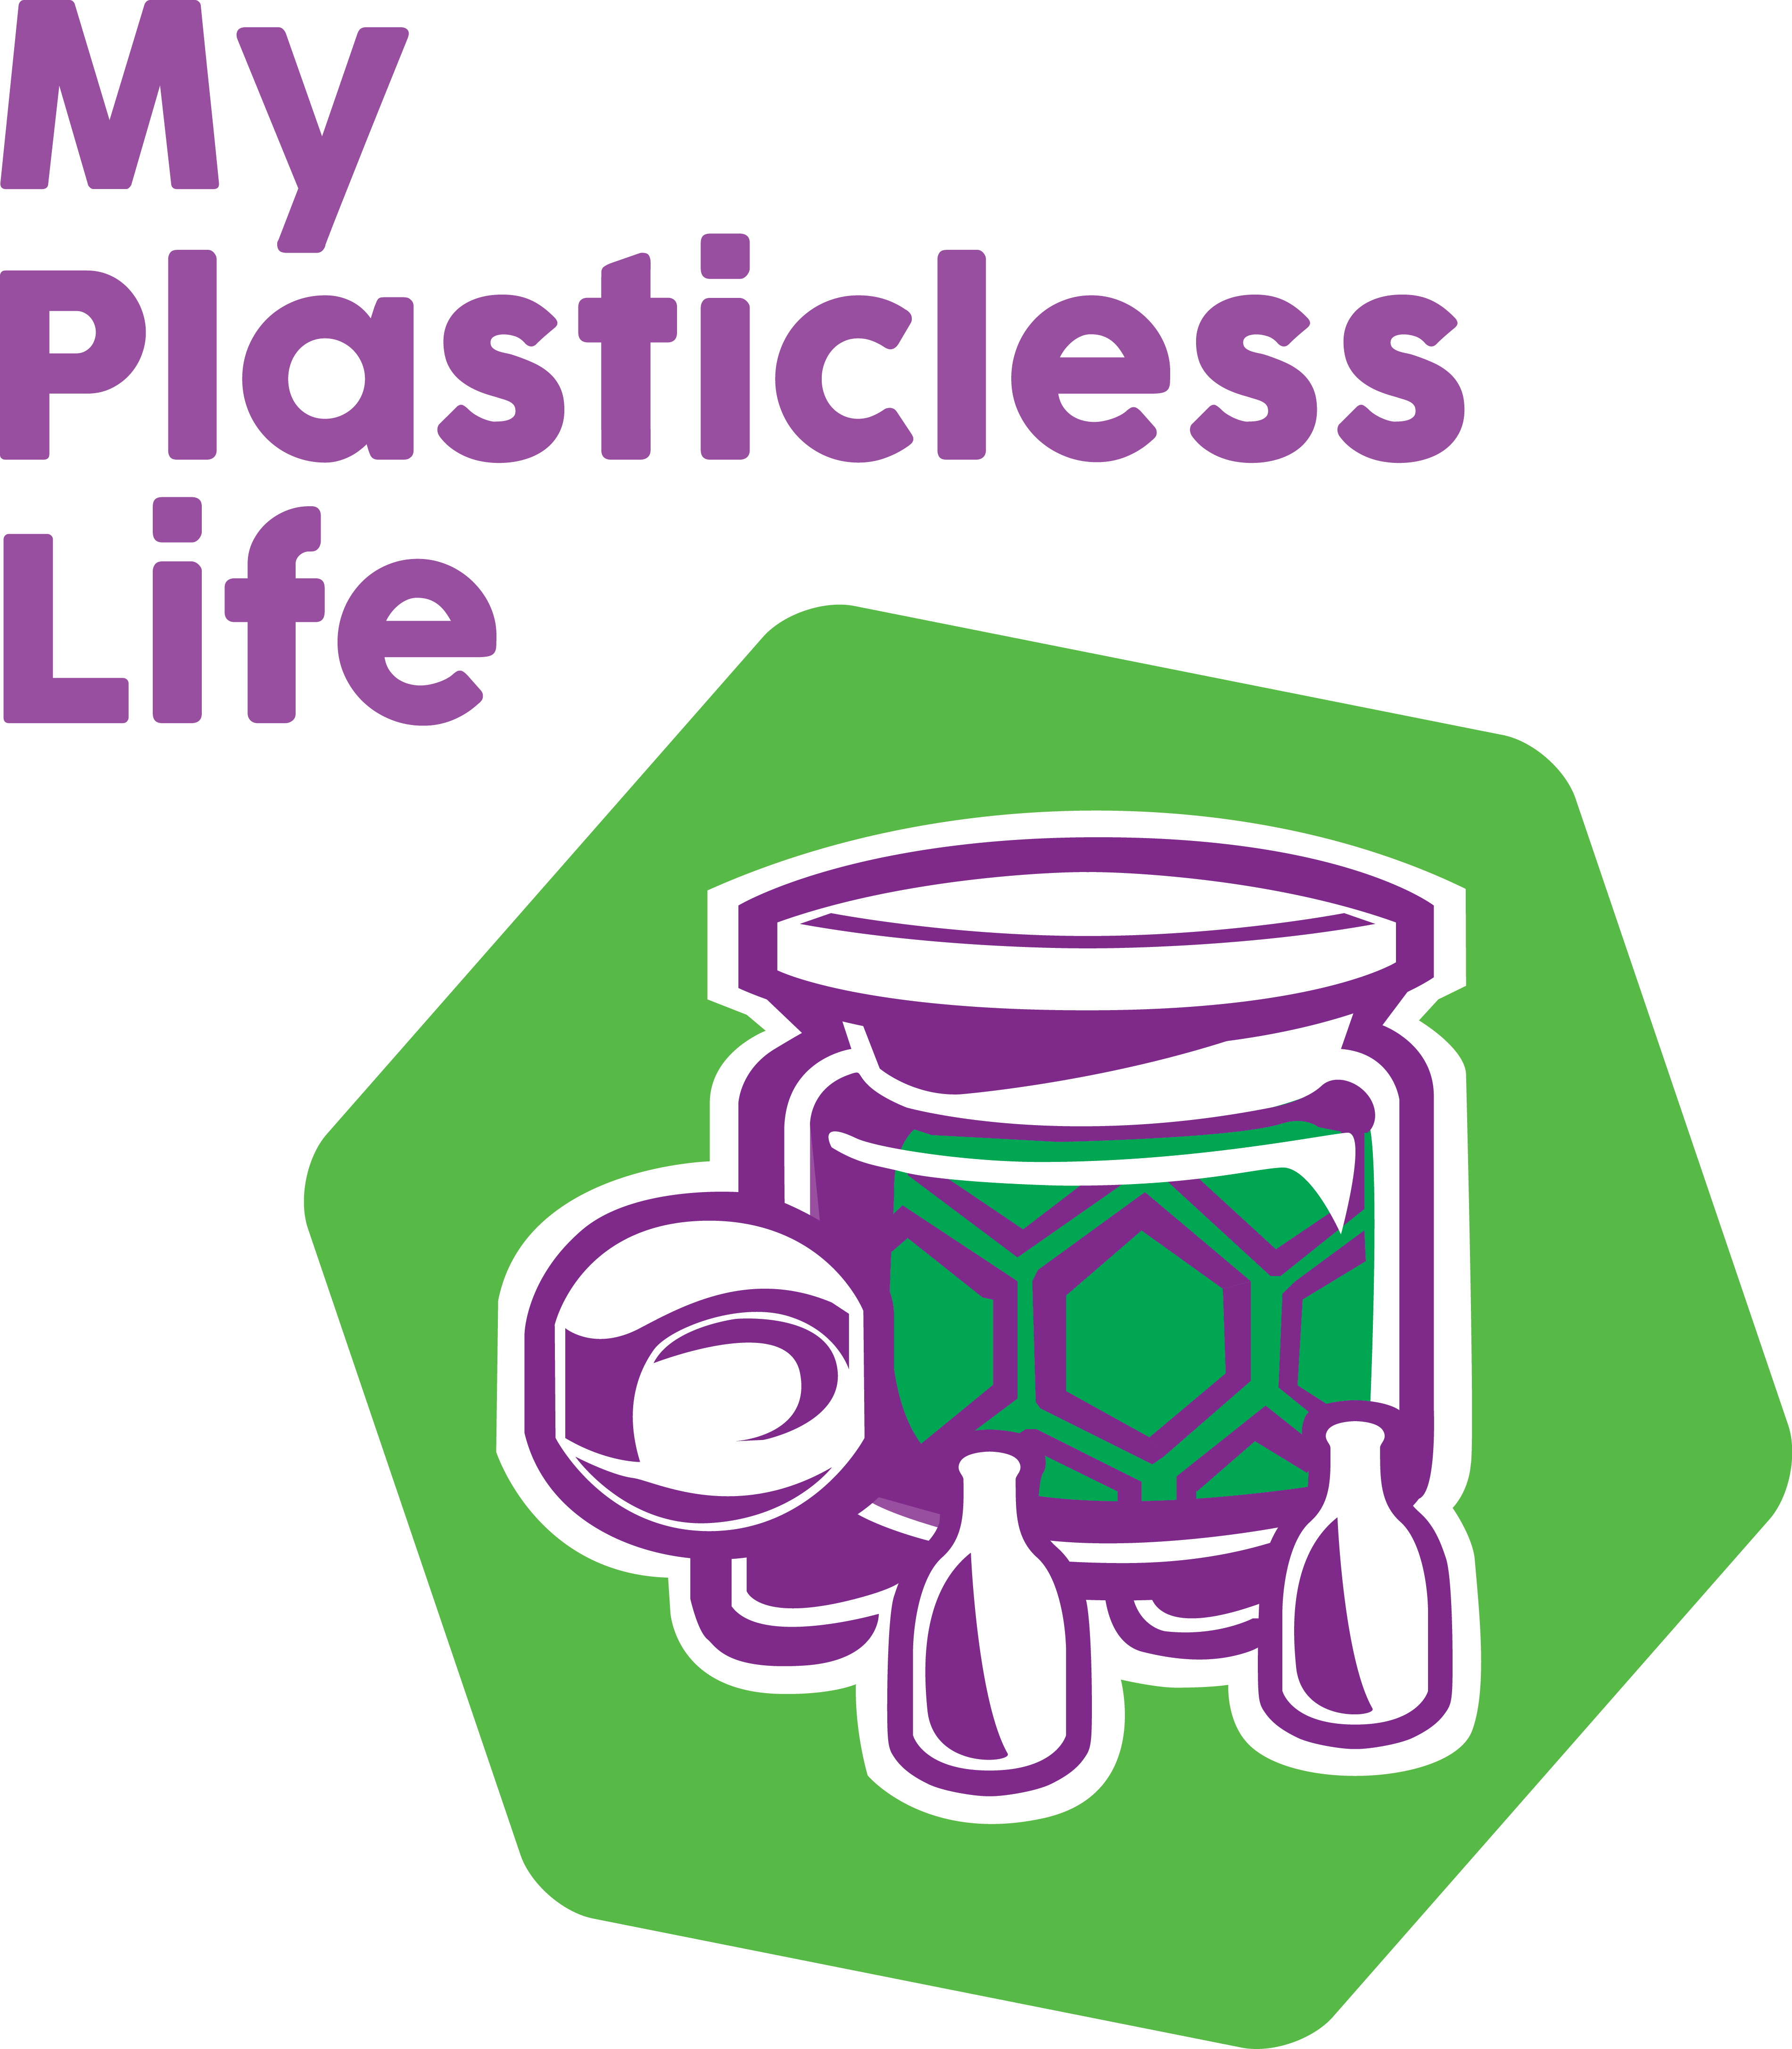 My Plastic-Less Life